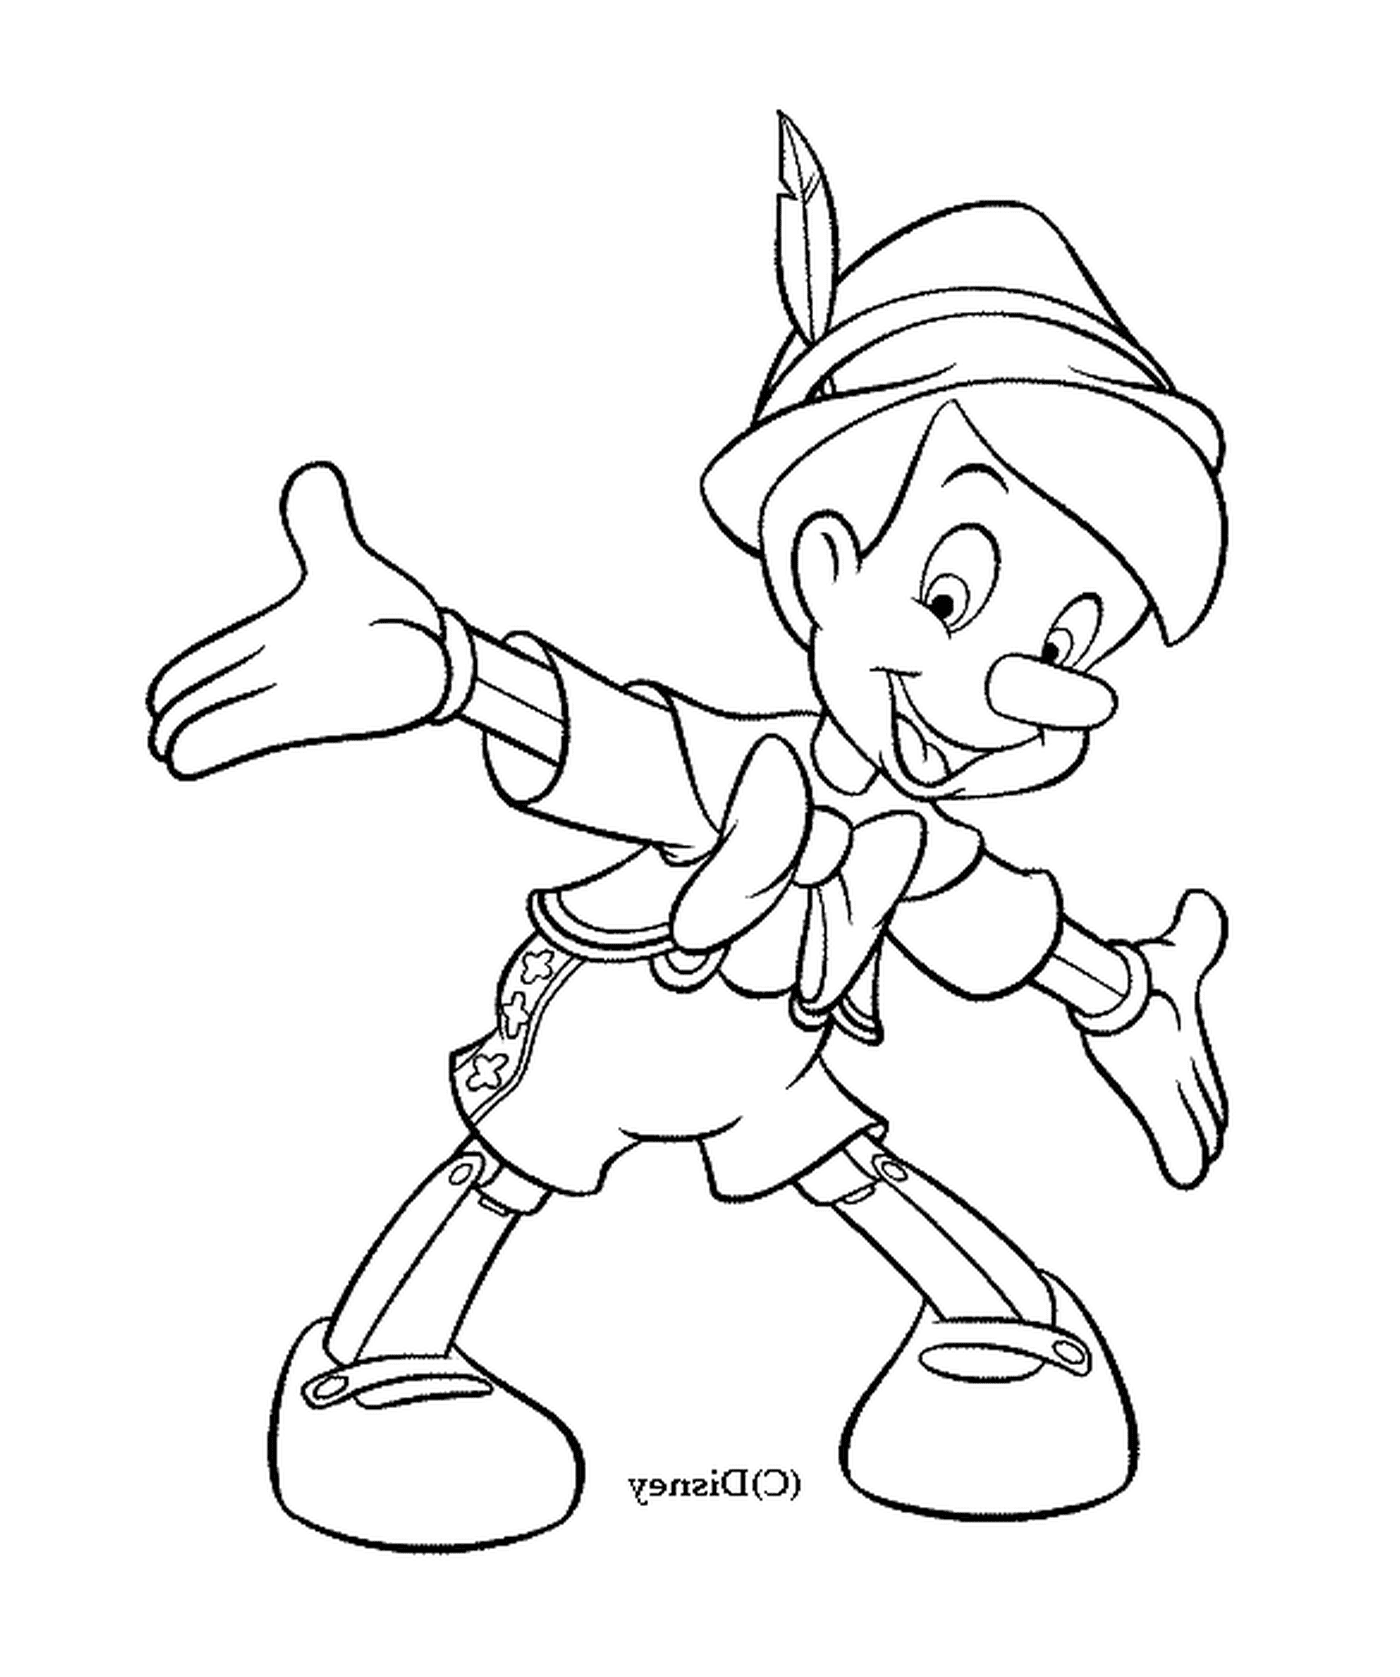   Pinocchio, bras grands ouverts 